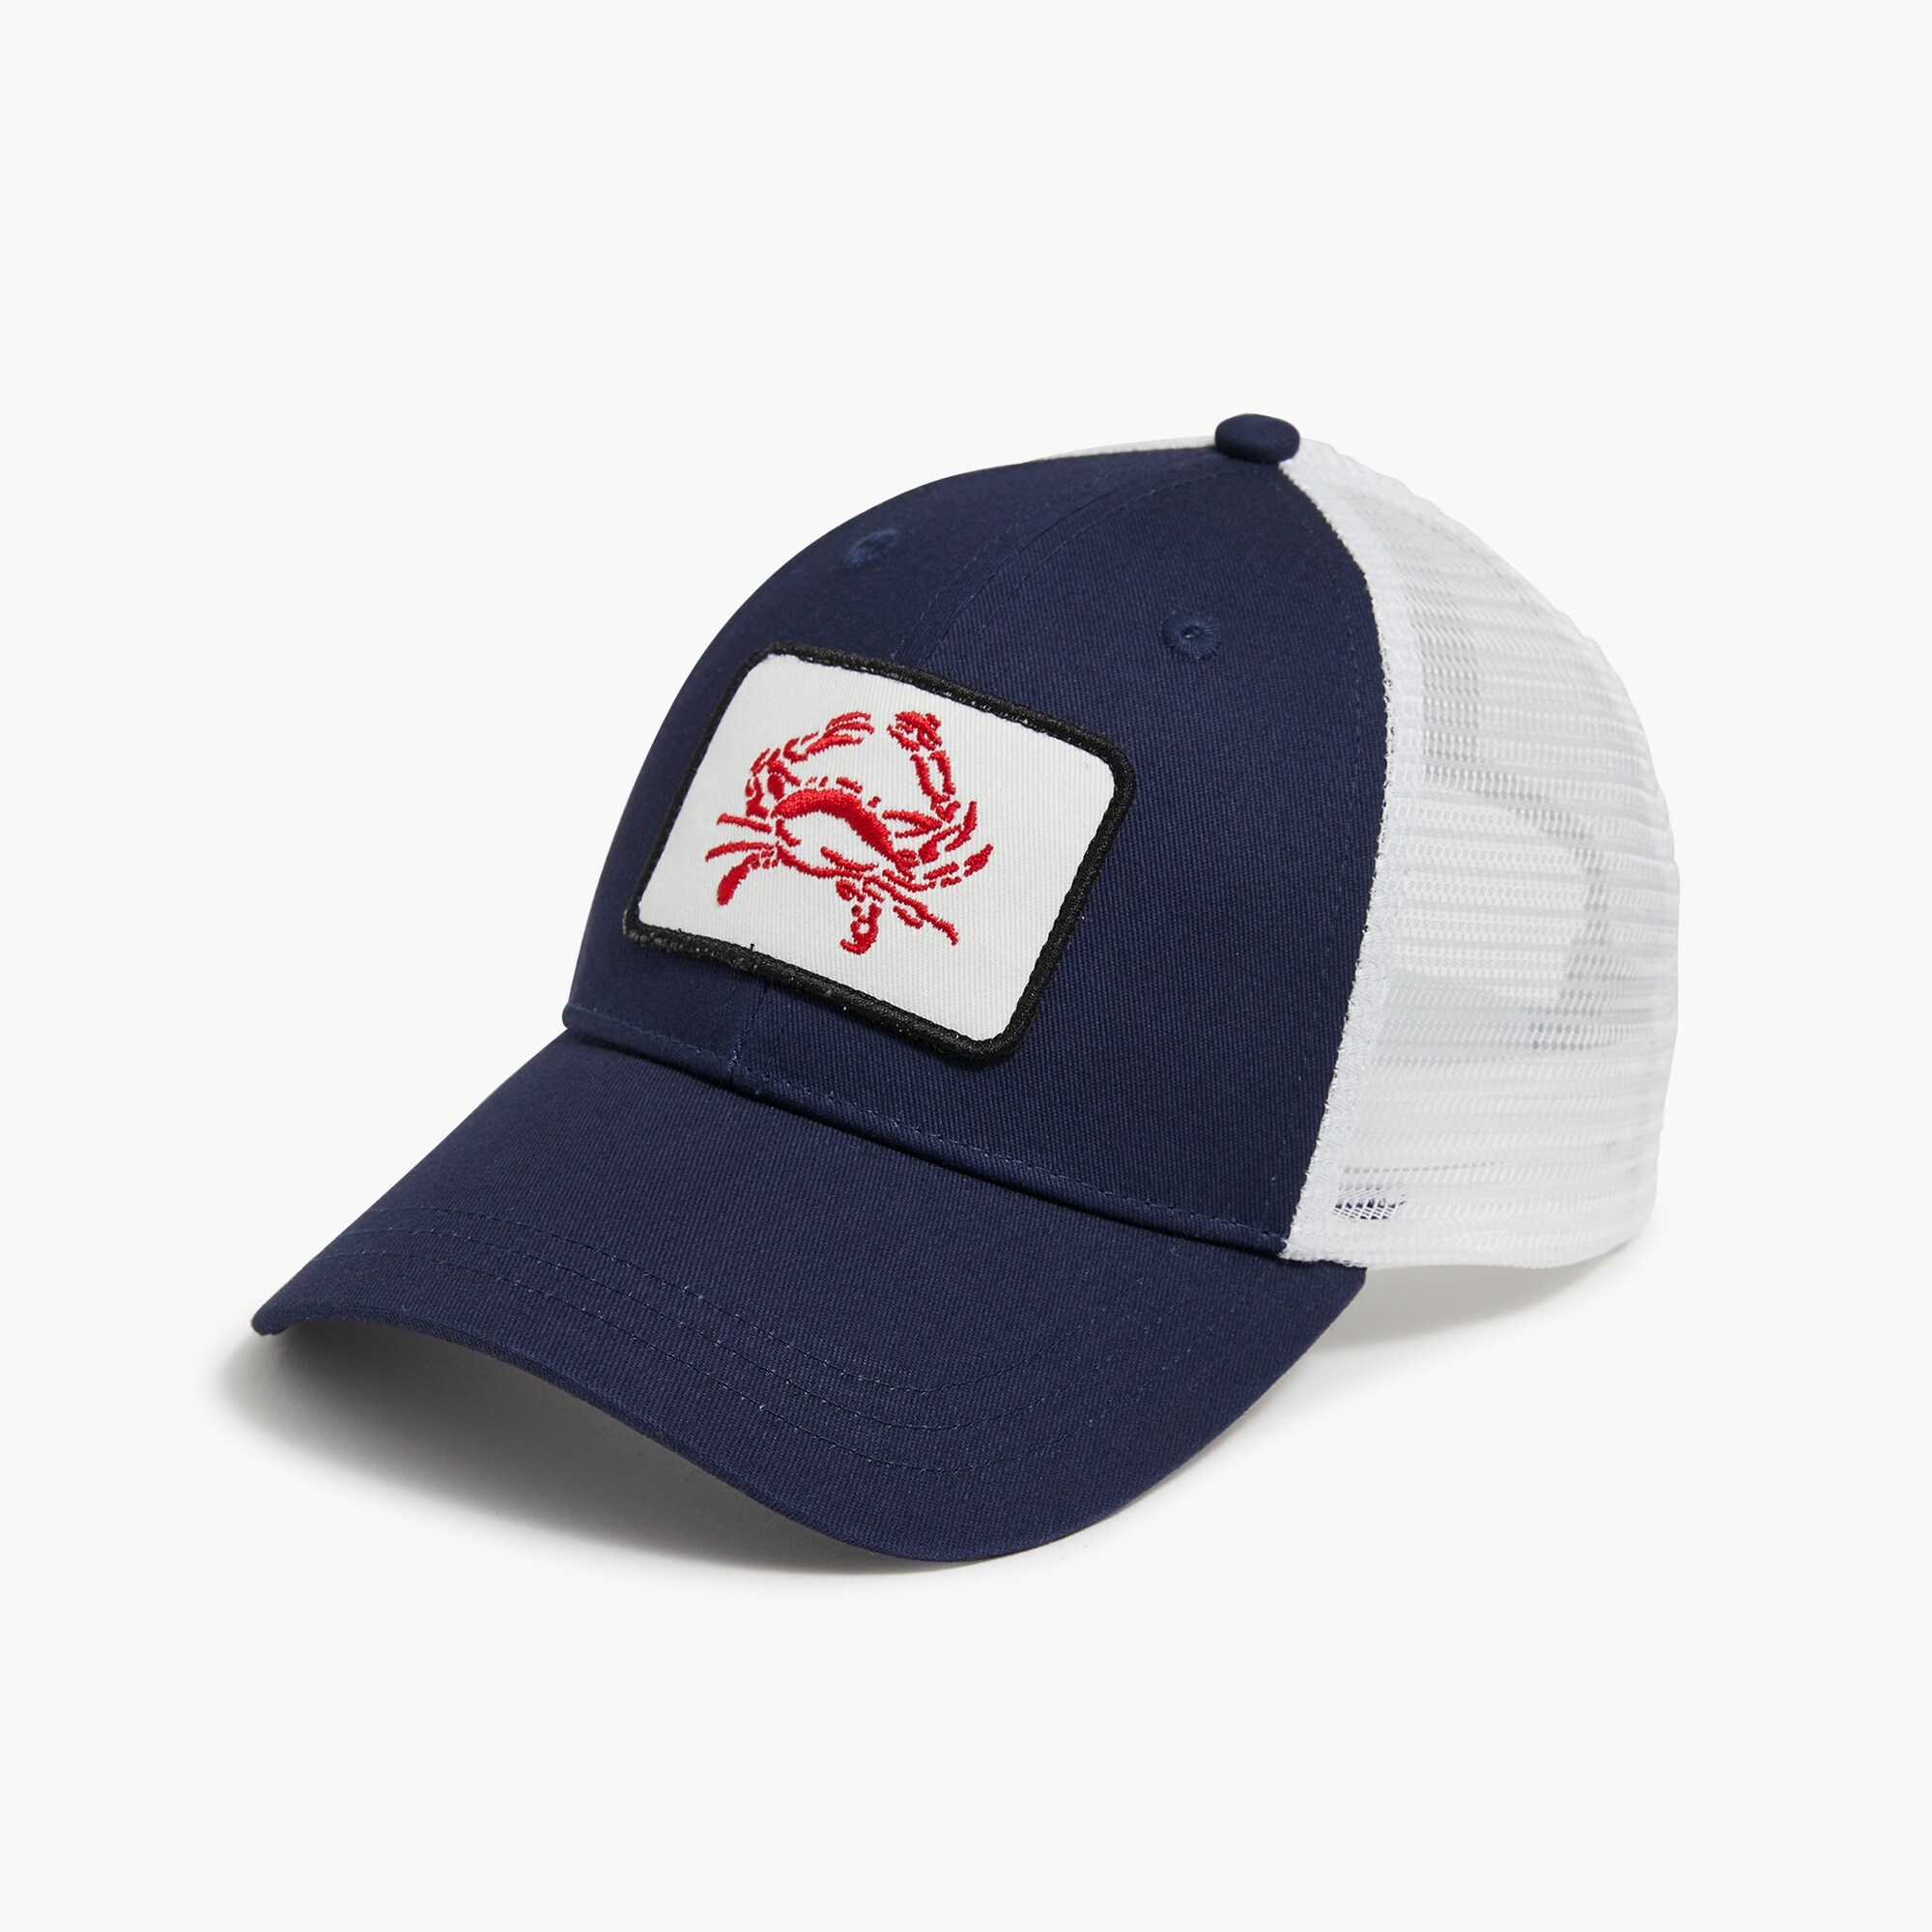  Embroidered trucker hat